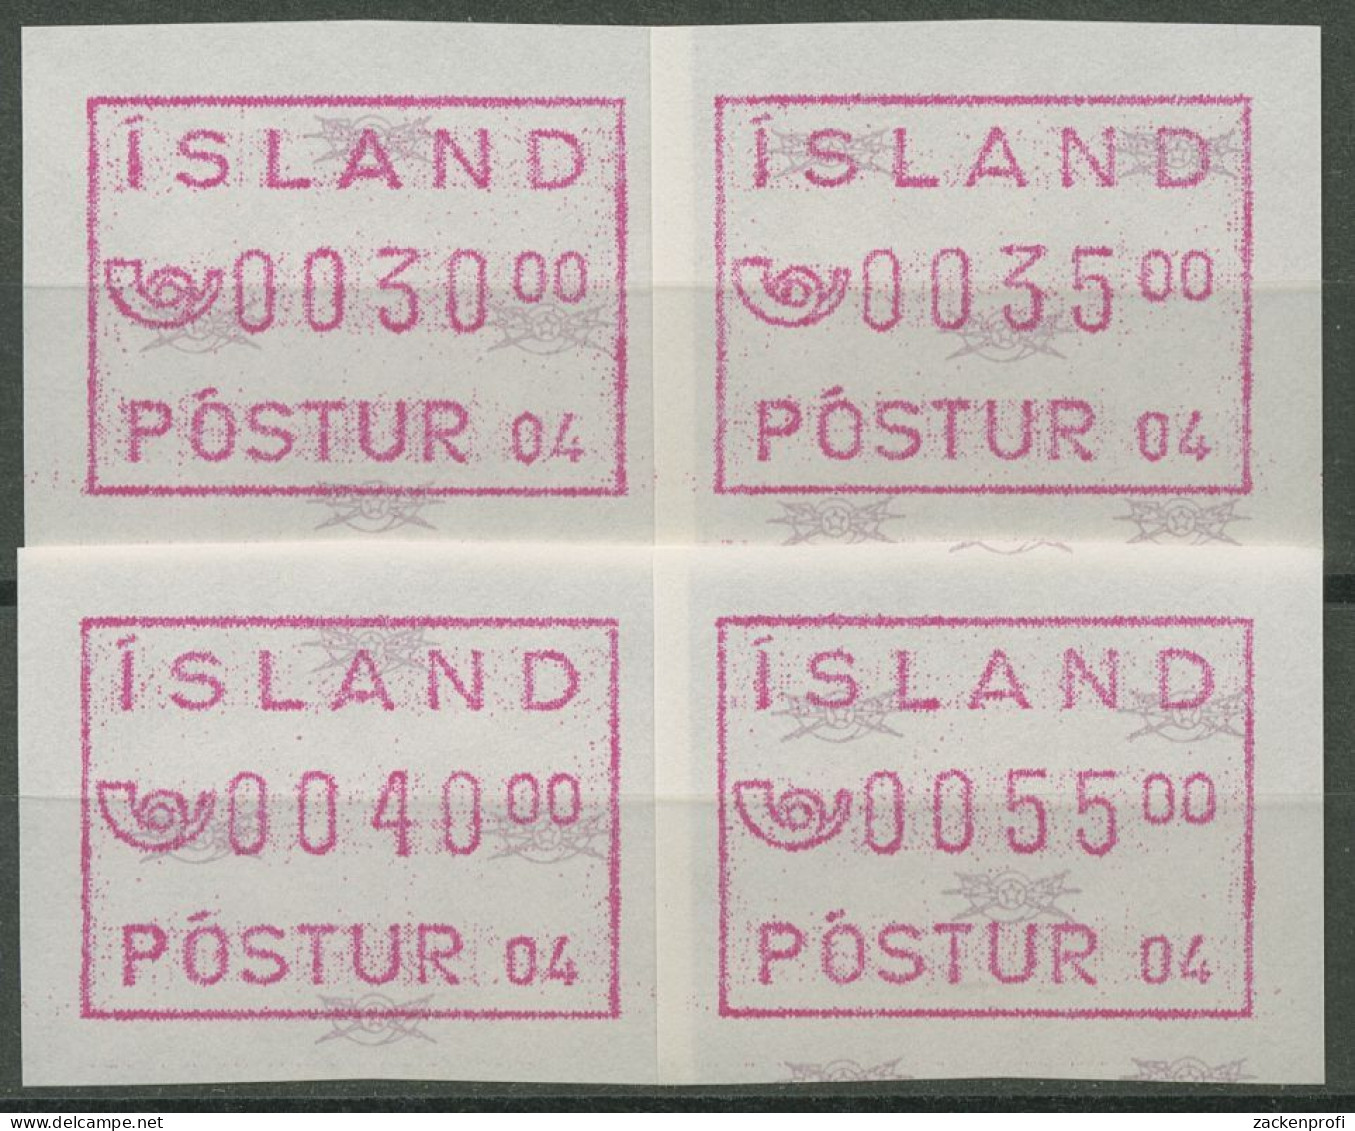 Island ATM 1993 Freimarke Automat 04, Satz 4 Werte, ATM 2.2 S2 Postfrisch - Viñetas De Franqueo (Frama)